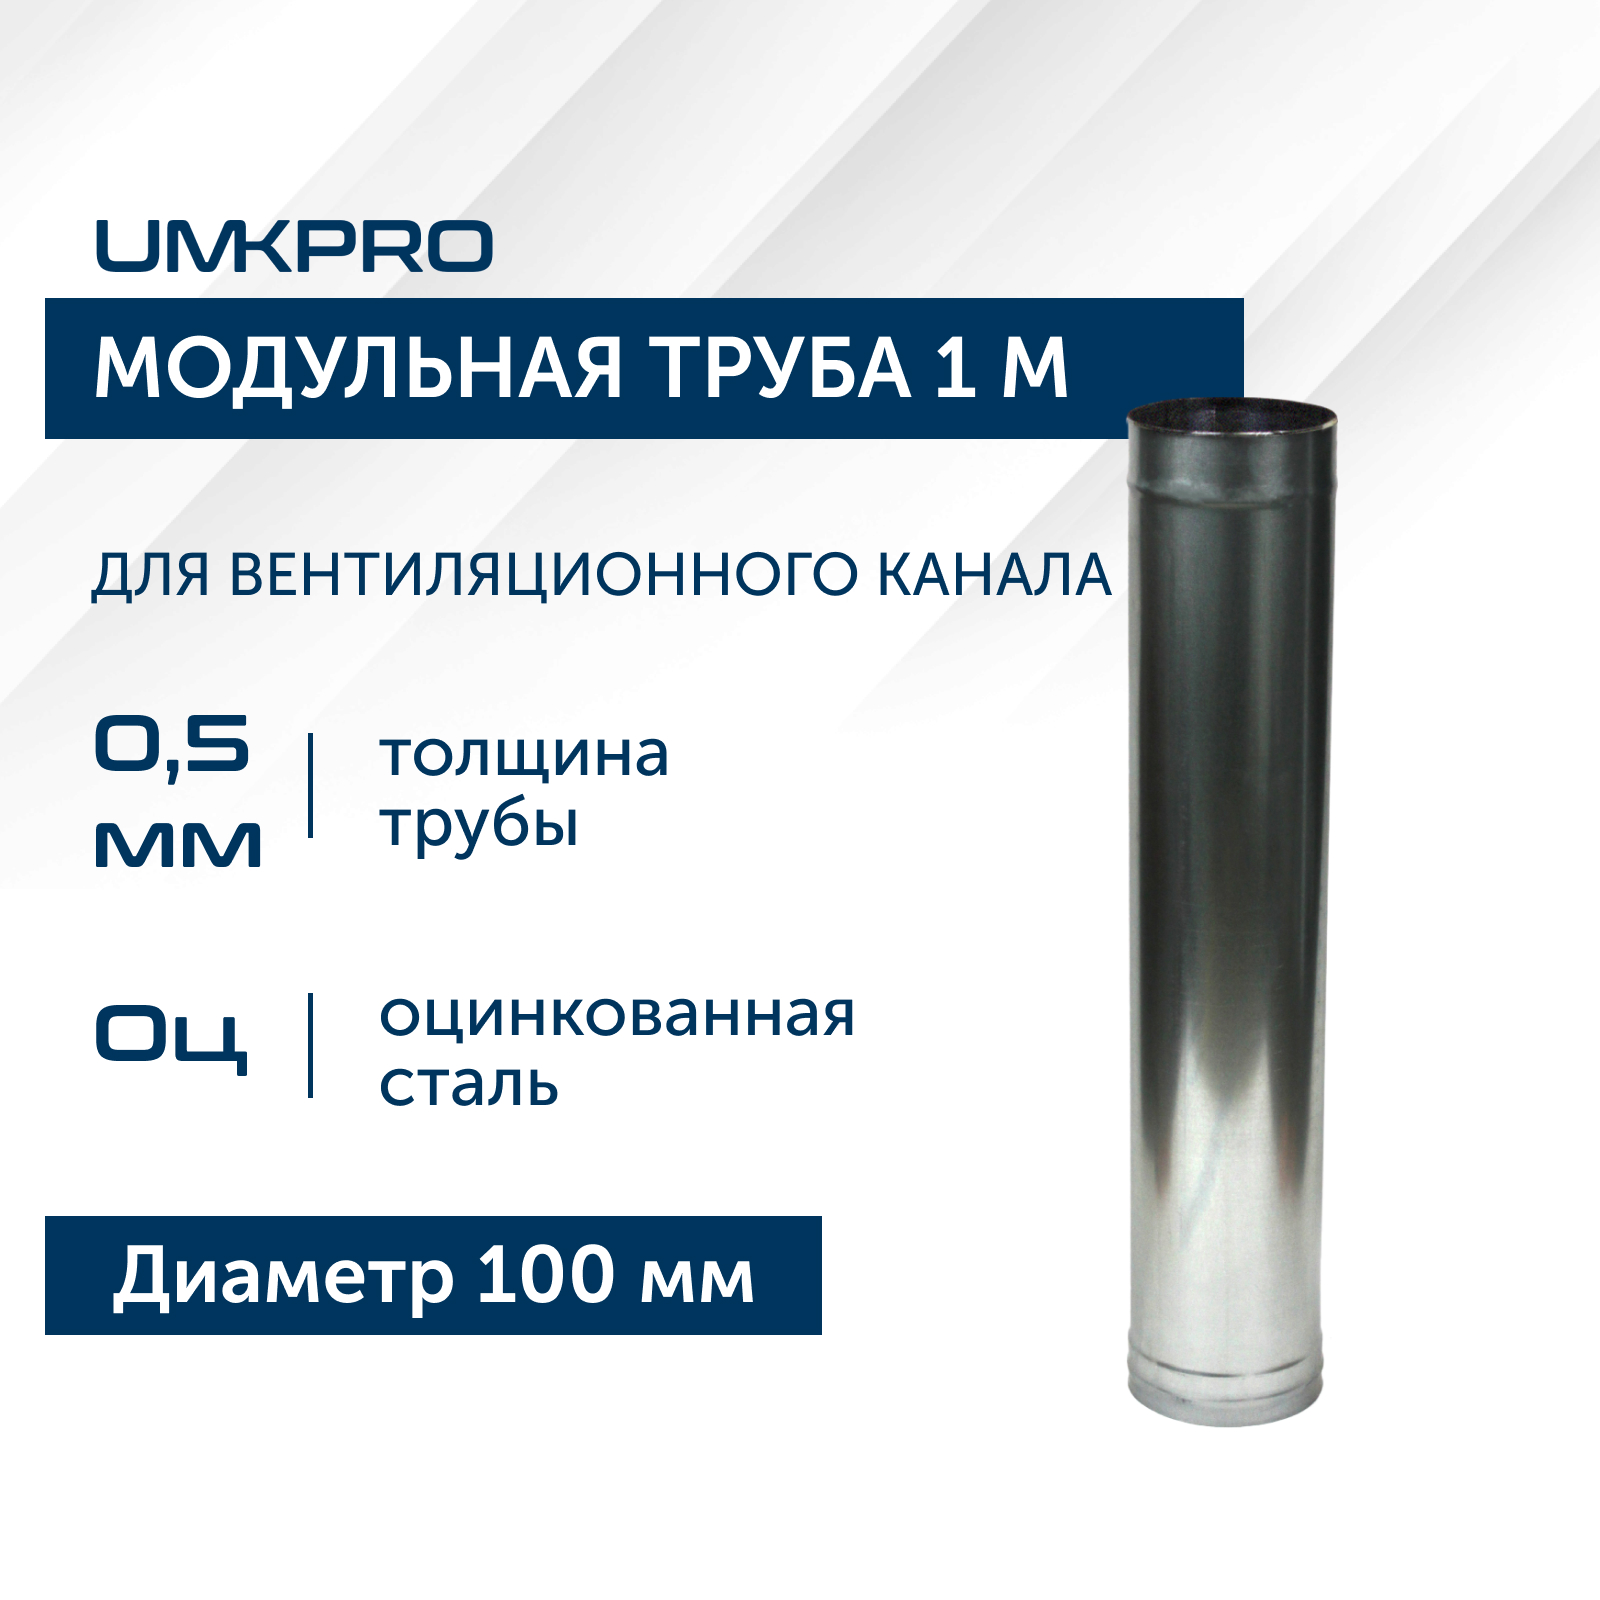 Труба модульная для дымохода 1 м UMKPRO, D 100, Оц/0,5мм